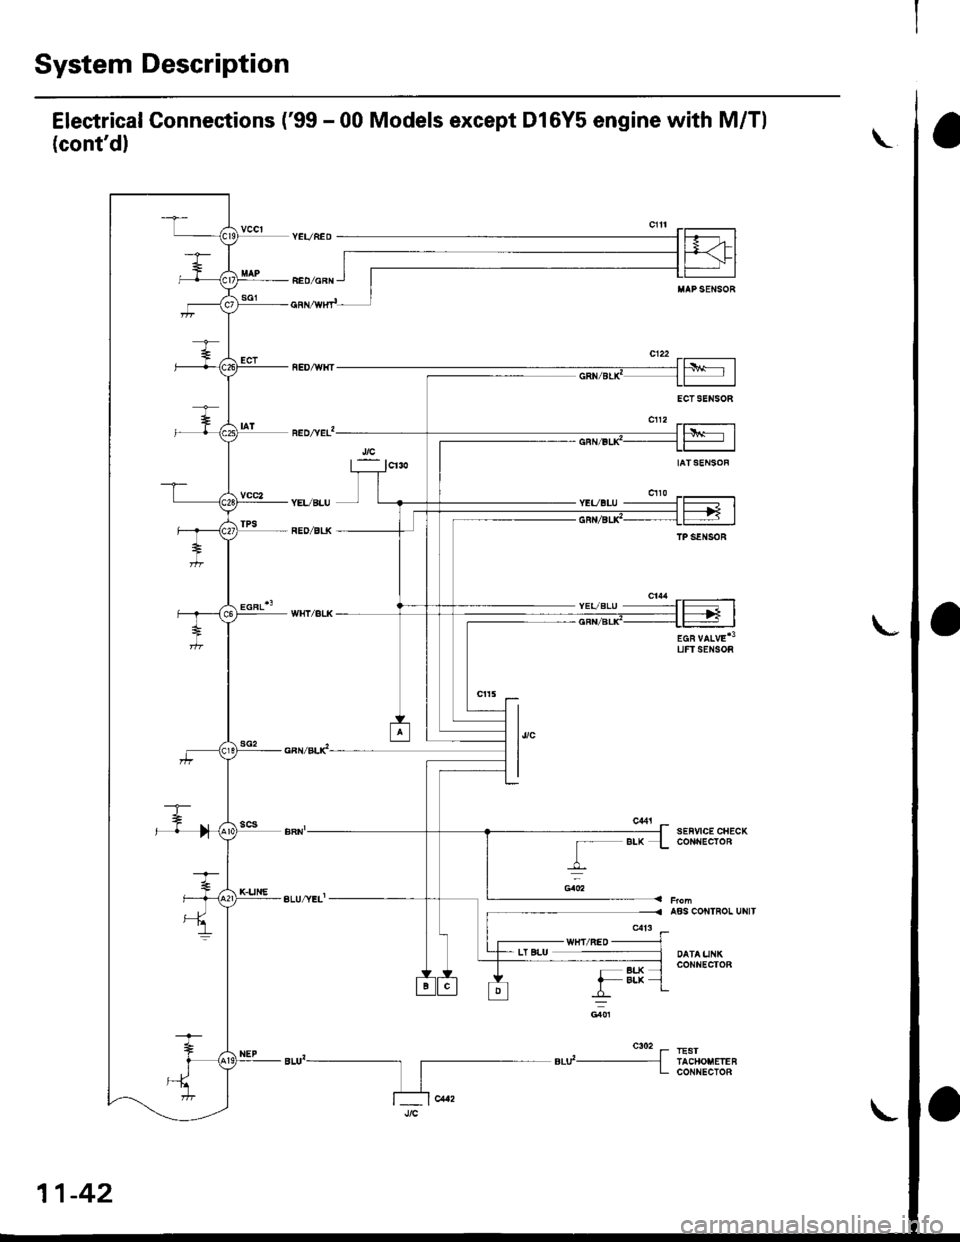 HONDA CIVIC 1997 6.G Owners Guide System Description
Electrical Connections (99 - 00 Models except D16Y5 engine with M/Tl
(contdl
UFTSENSOR
L
ABS CONTROL UNIT
CONI{ECTOR- BLX
_r "*
\
sEnucE cSEcKCONNECOR
11-42
aLul- _--r ".* 
"to 